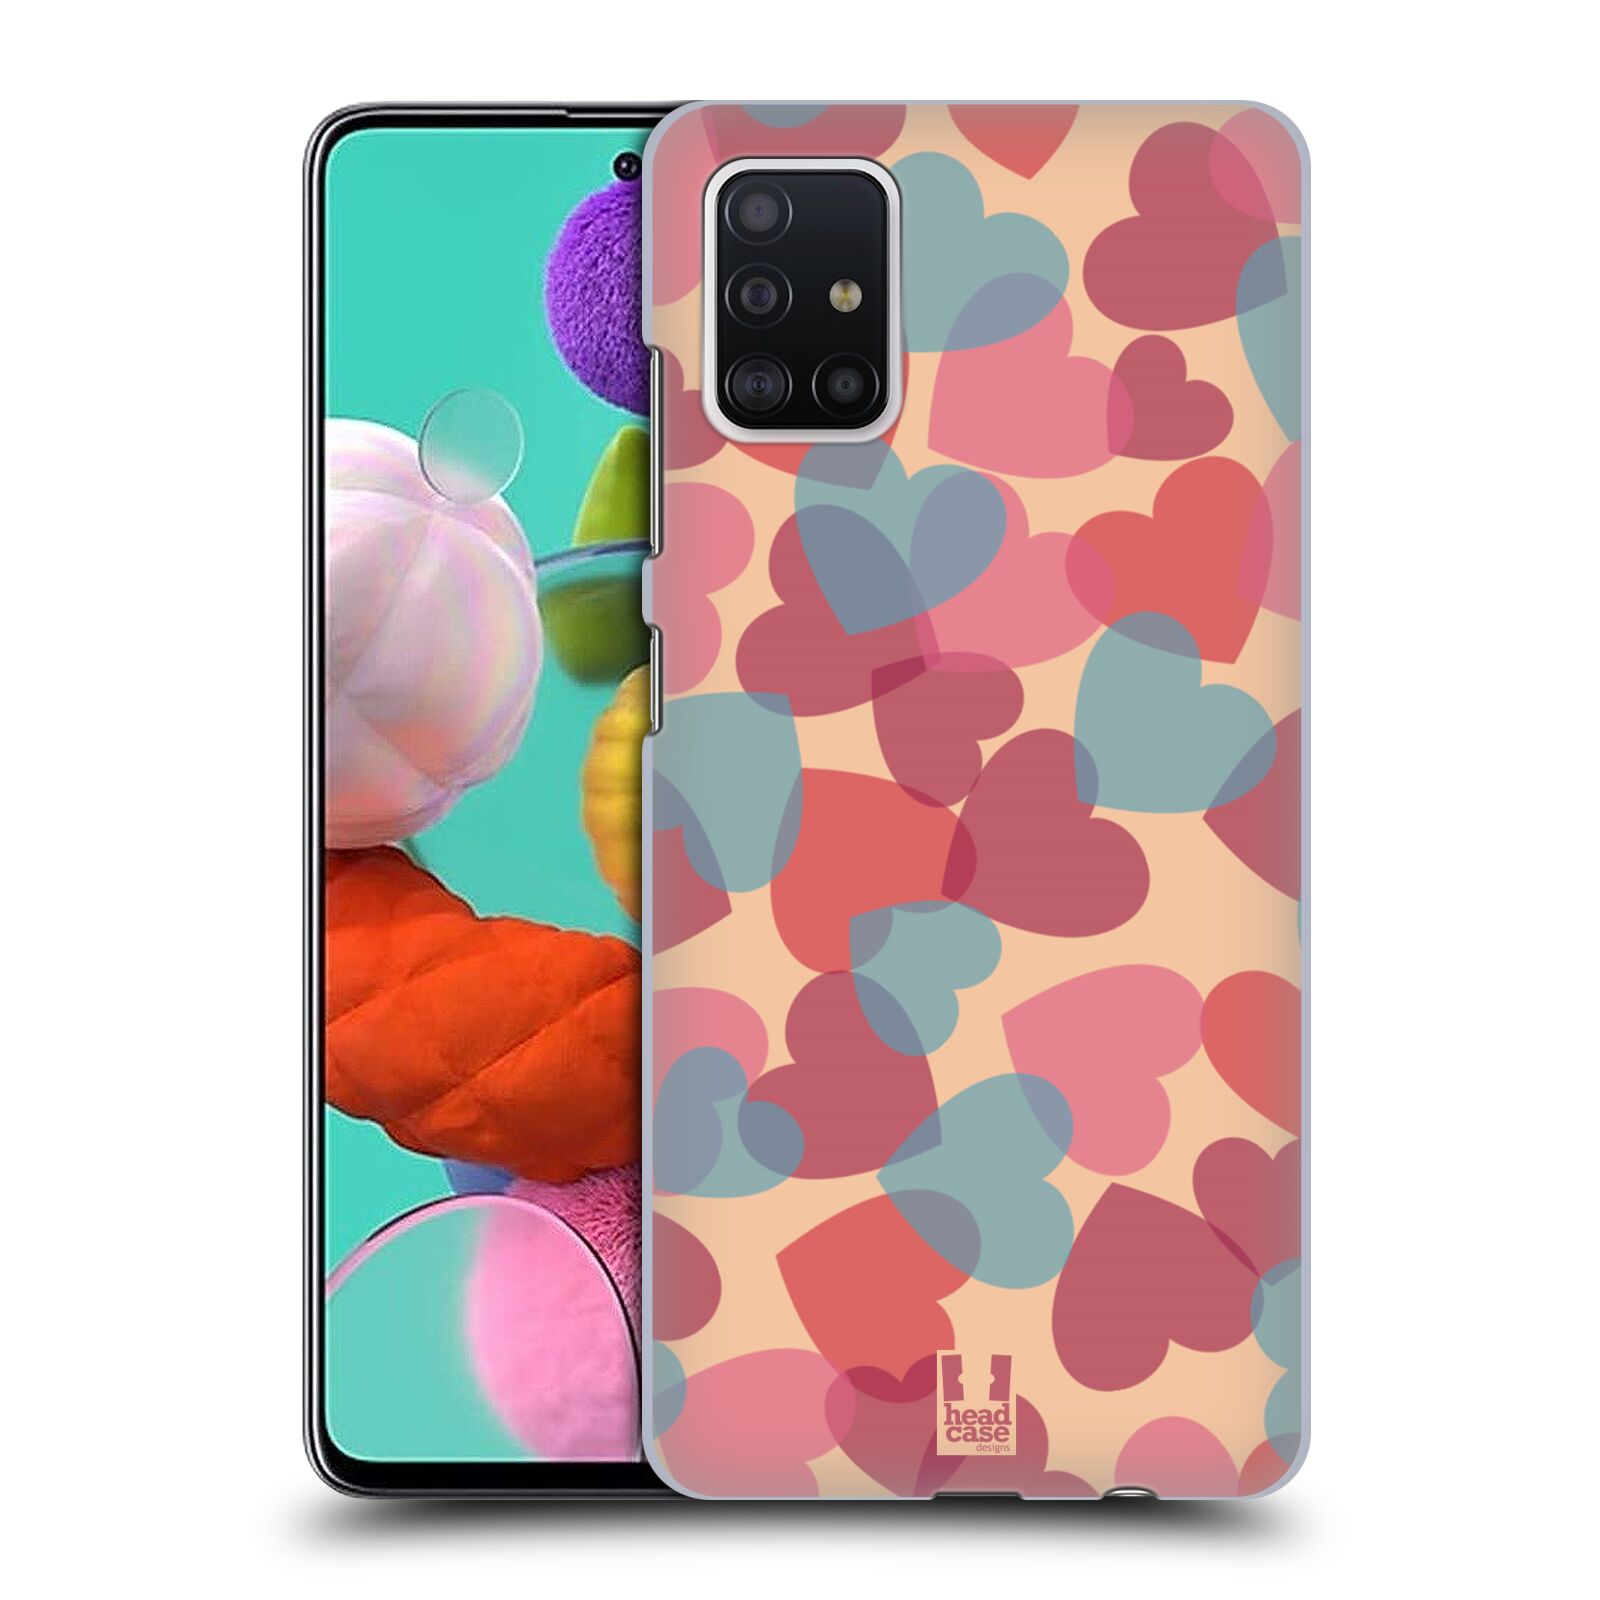 Zadní obal pro mobil Samsung Galaxy A51 - HEAD CASE - Růžová srdíčka kreslený vzor